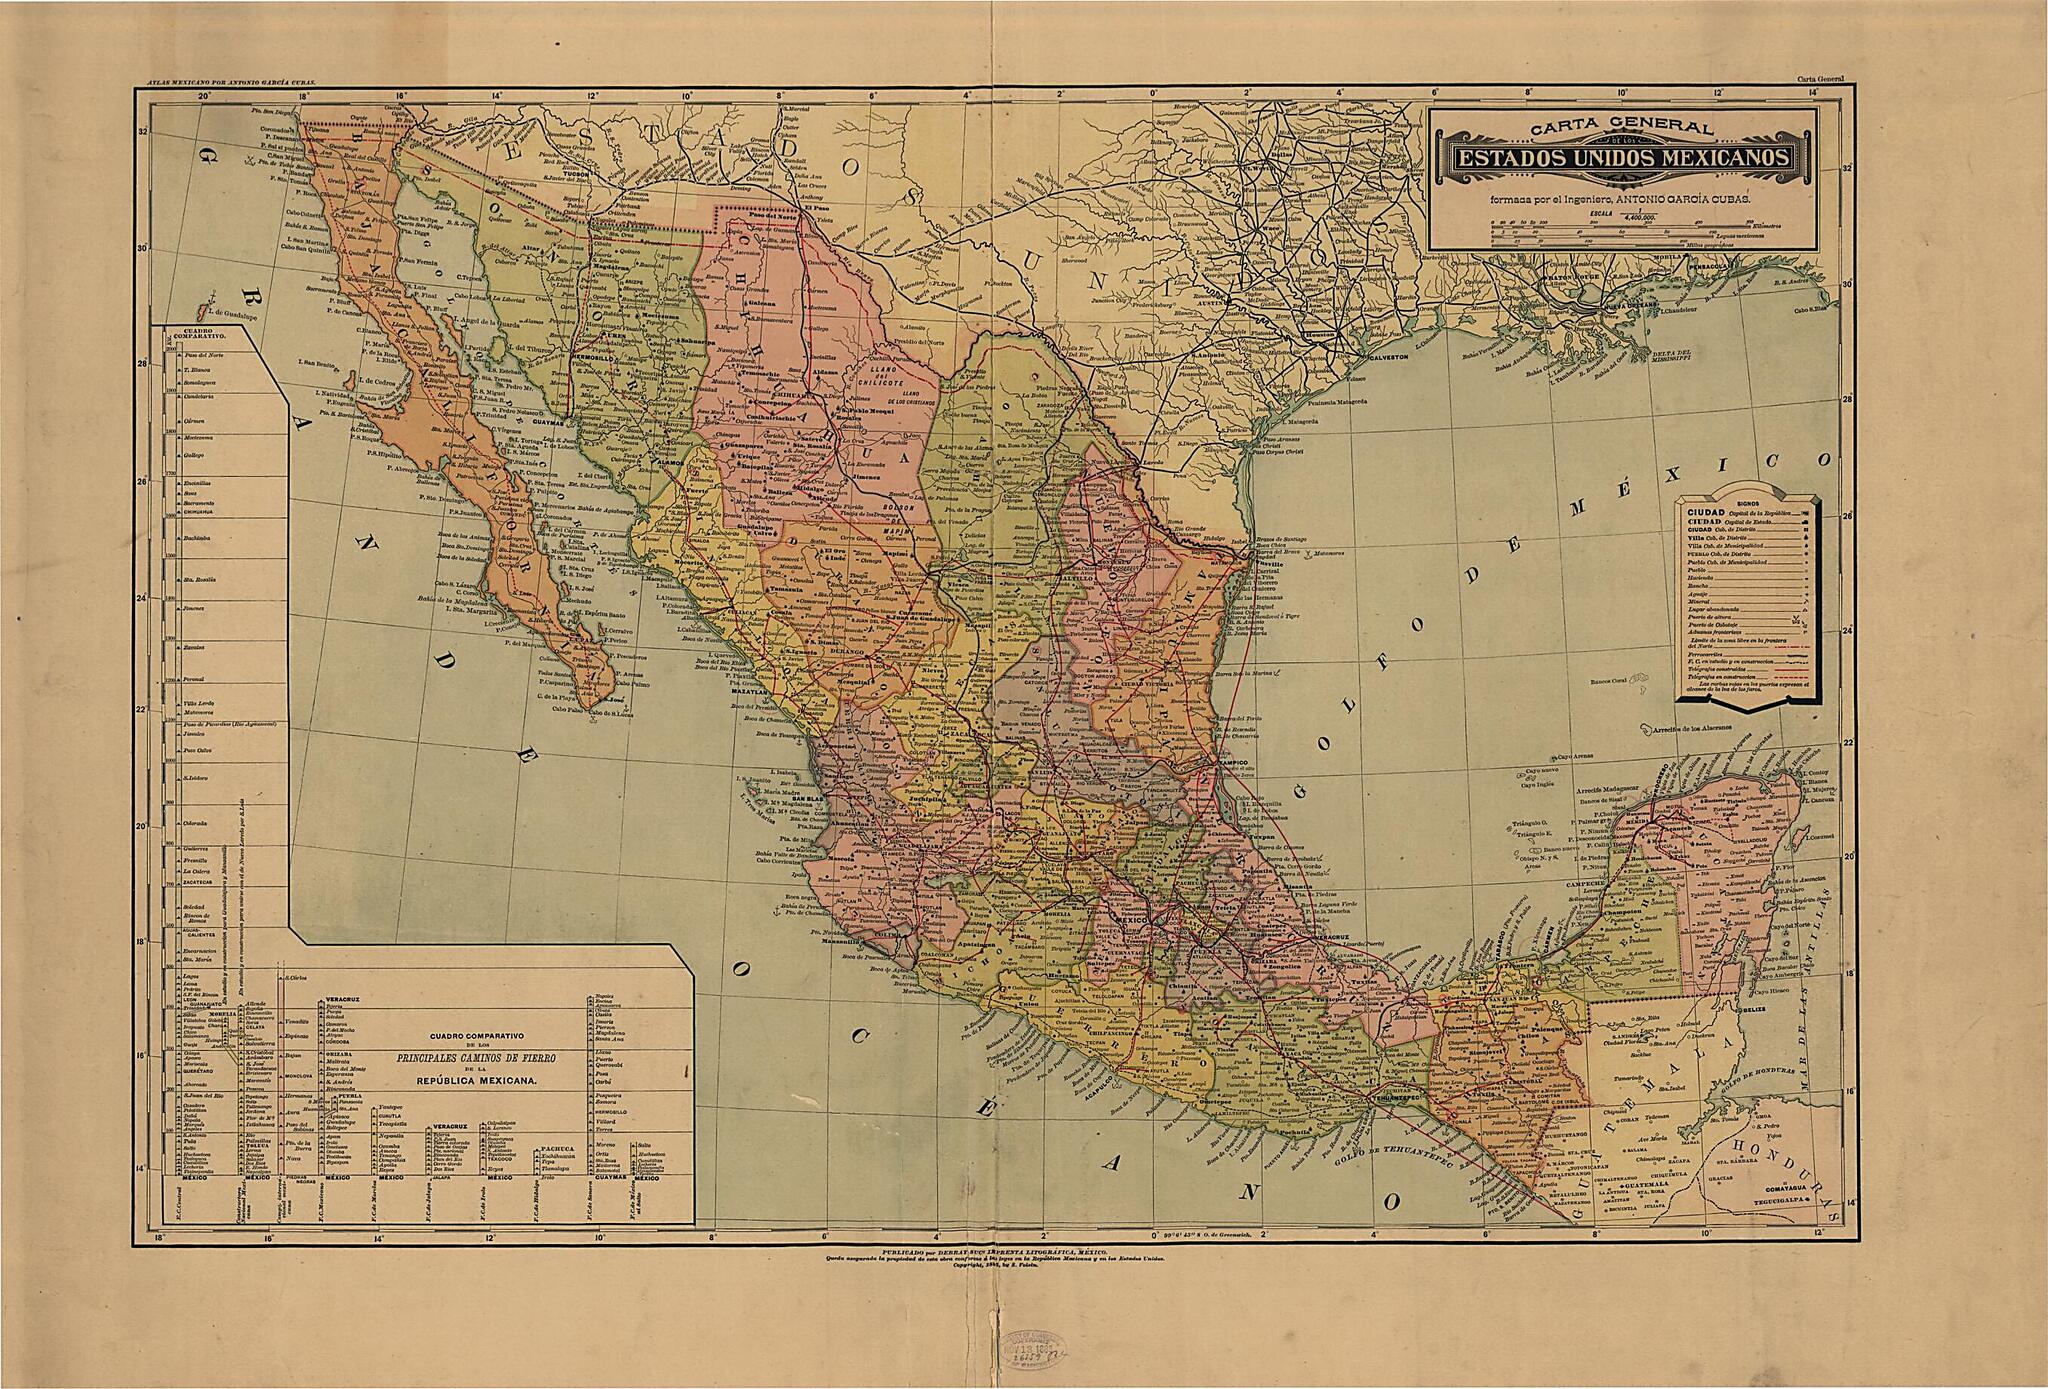 This old map of Atlas Mexicano from 1884 was created by Antonio García Cubas in 1884